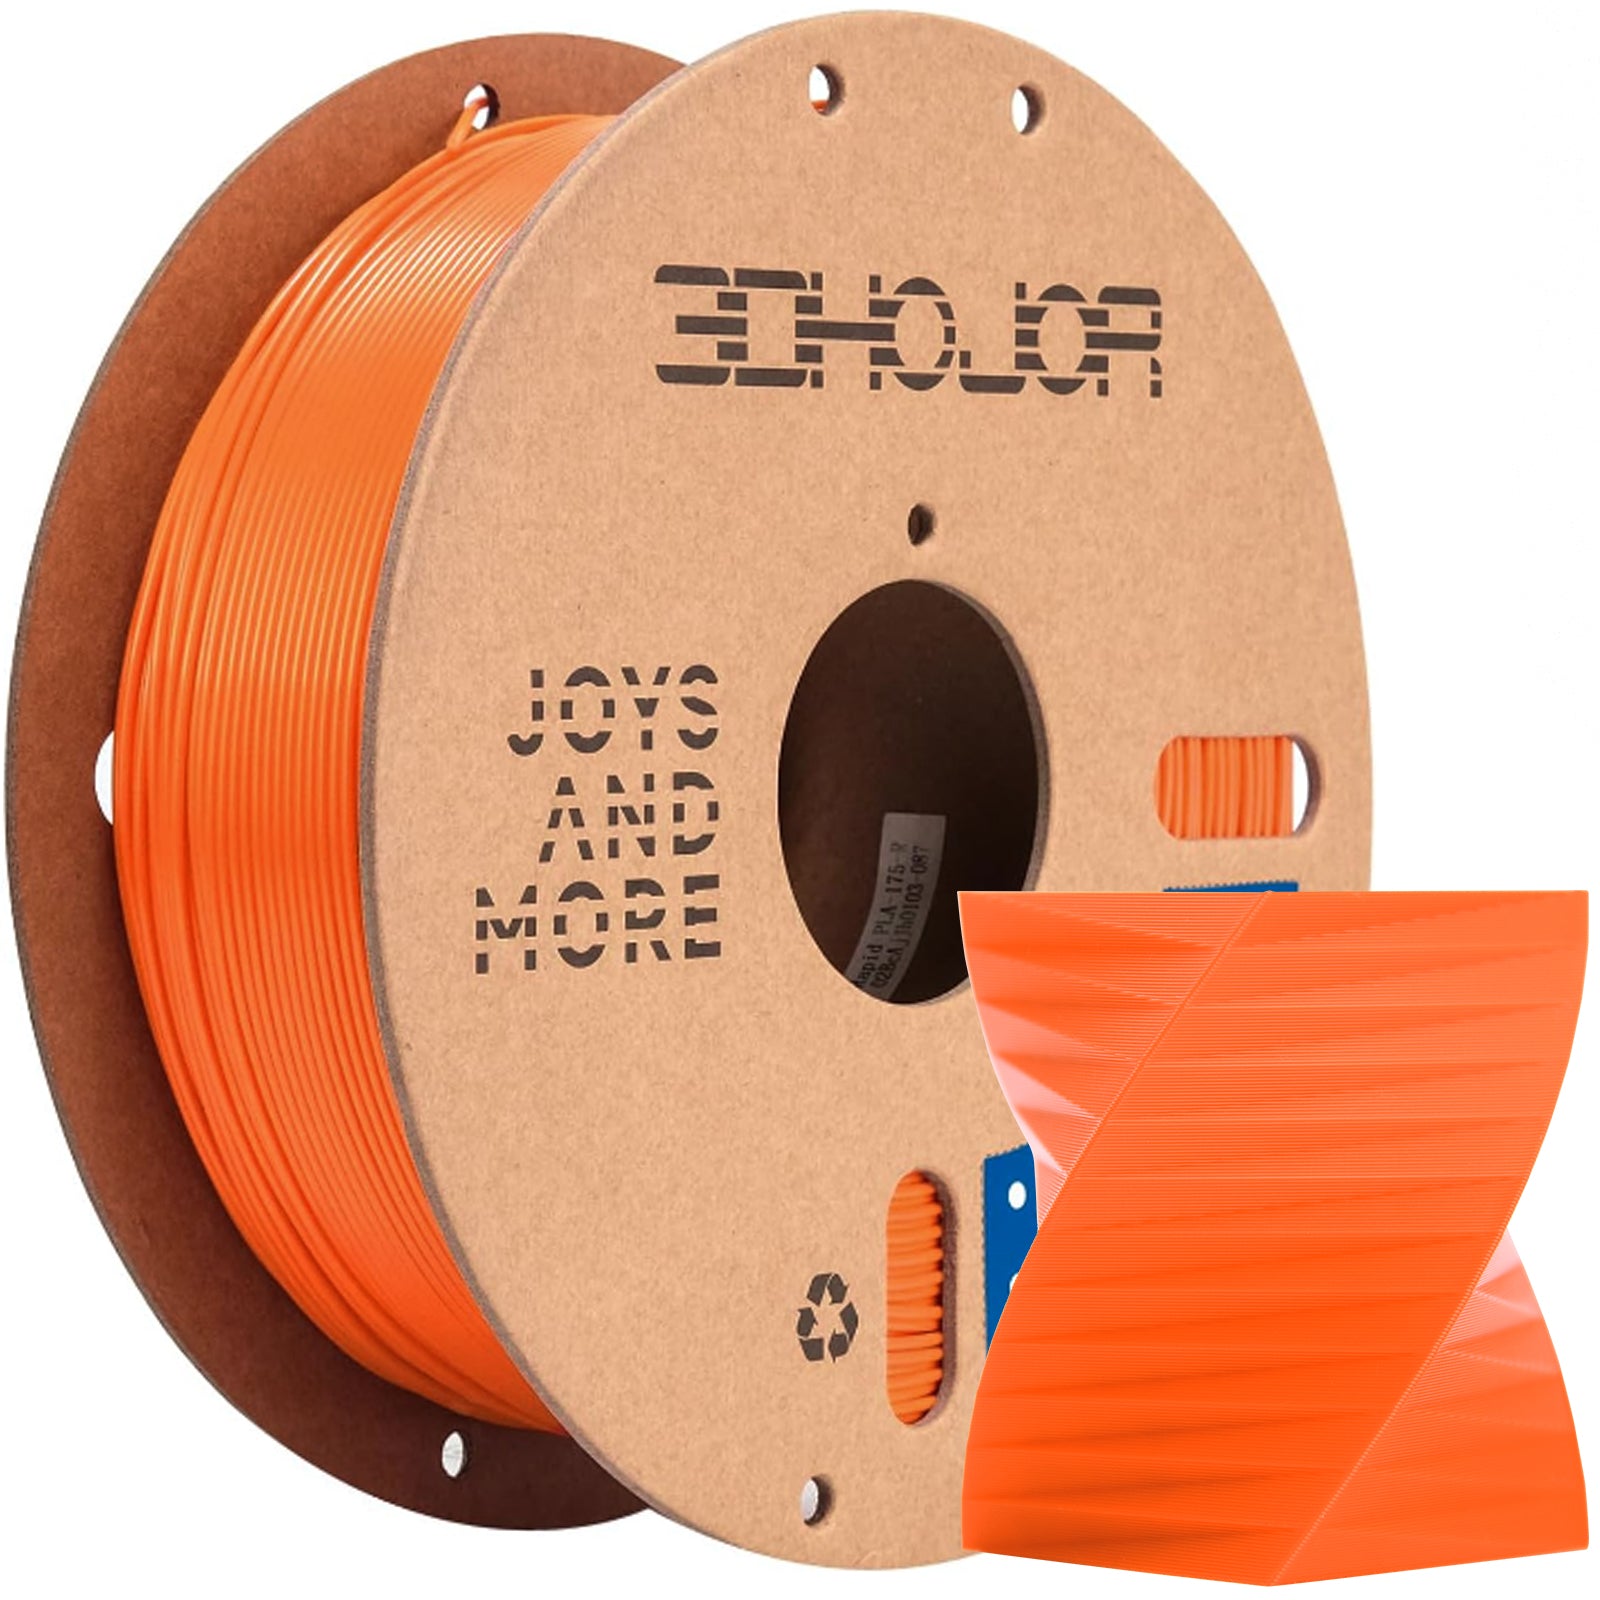 3DHoJor PLA High Speed Printer Filament 1.75mm 1kg Cardboard Spool (2.2lbs) Rapid PLA to 5X Faster Printing Filament PLA Dimensional Accuracy +/- 0.02 mm Fits for Most FDM 3D Printer -Orange